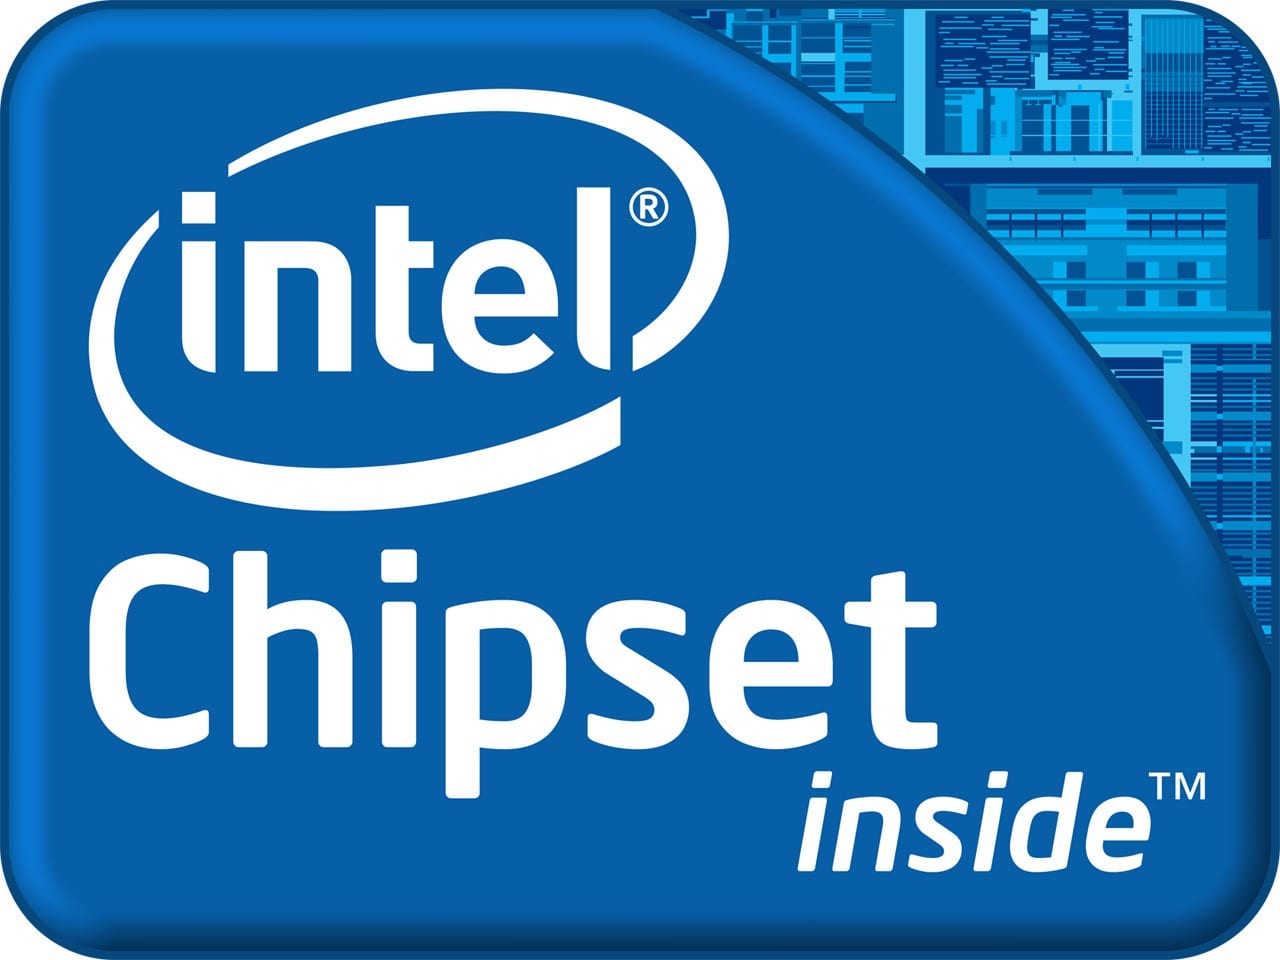 Reg intel. Интел. Логотип Intel. Чипсеты Интел. Значок Интел инсайд.